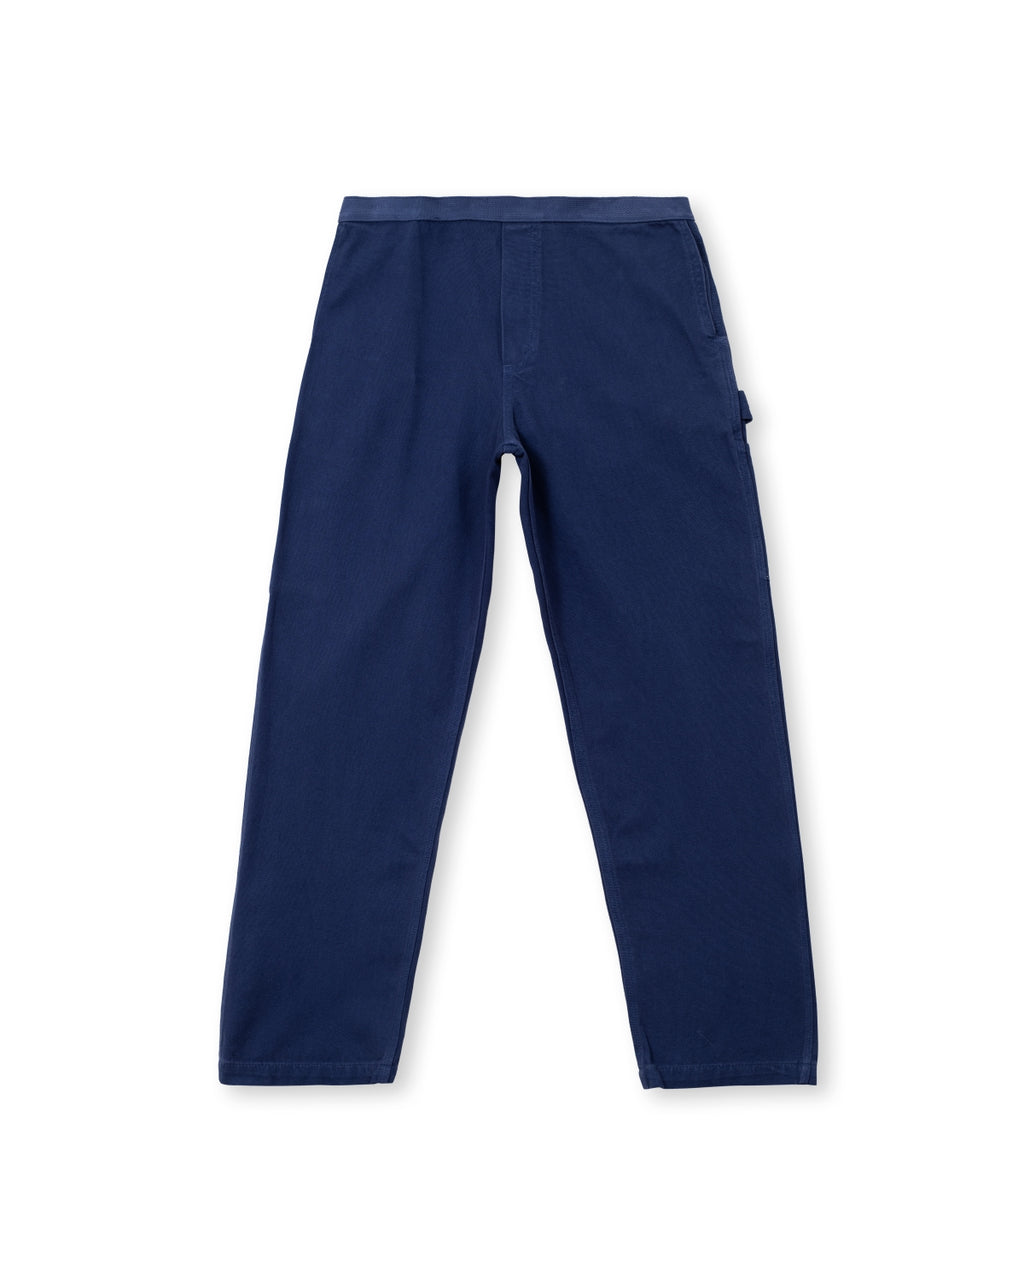 Washed Hard Ware/ Soft Wear Carpenter Pant - Navy 1